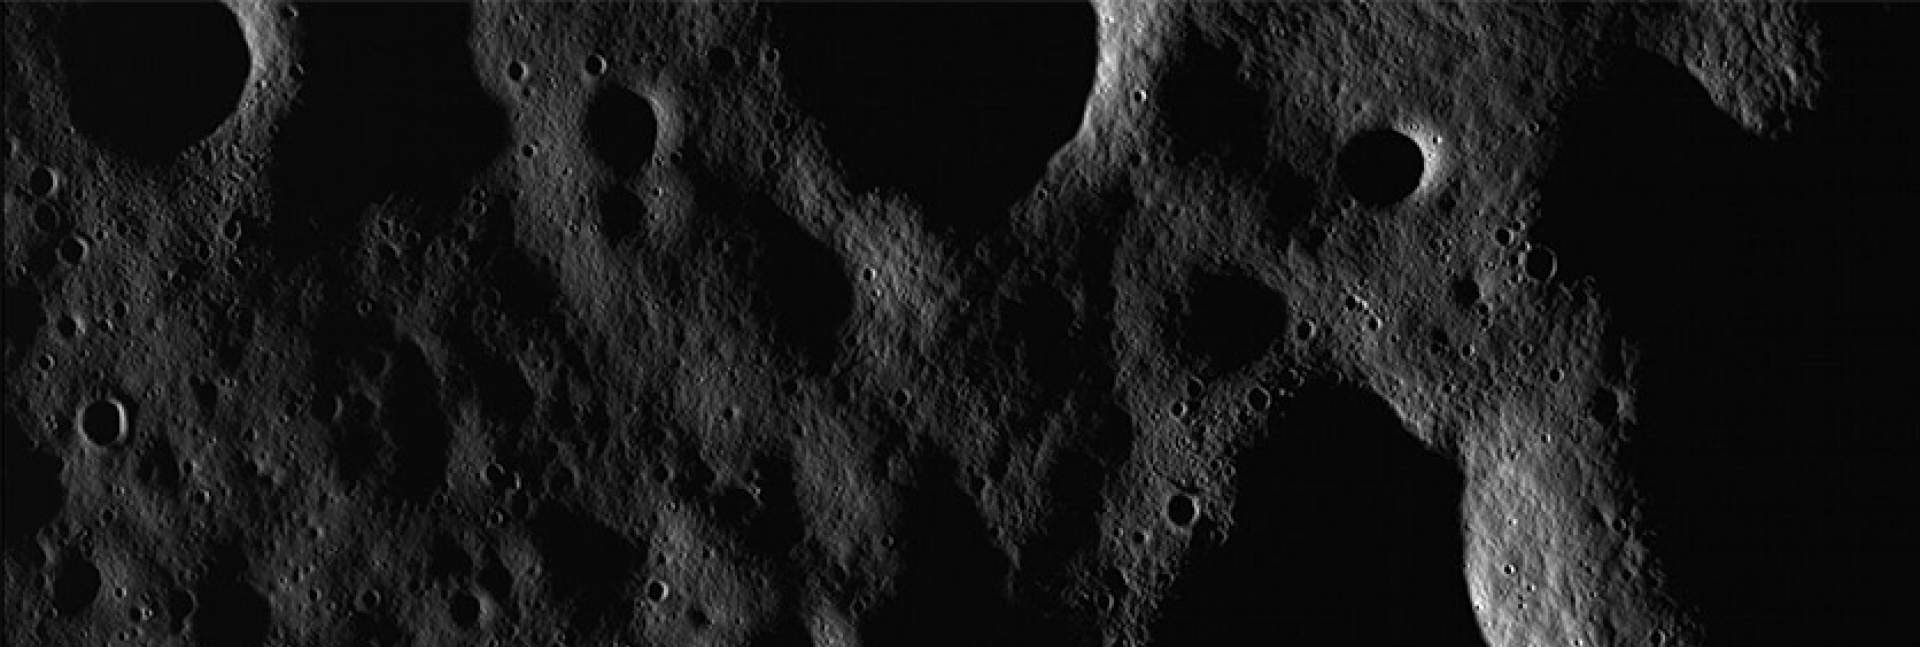 mini moon craters_Lunar Reconnaissance Orbiter 